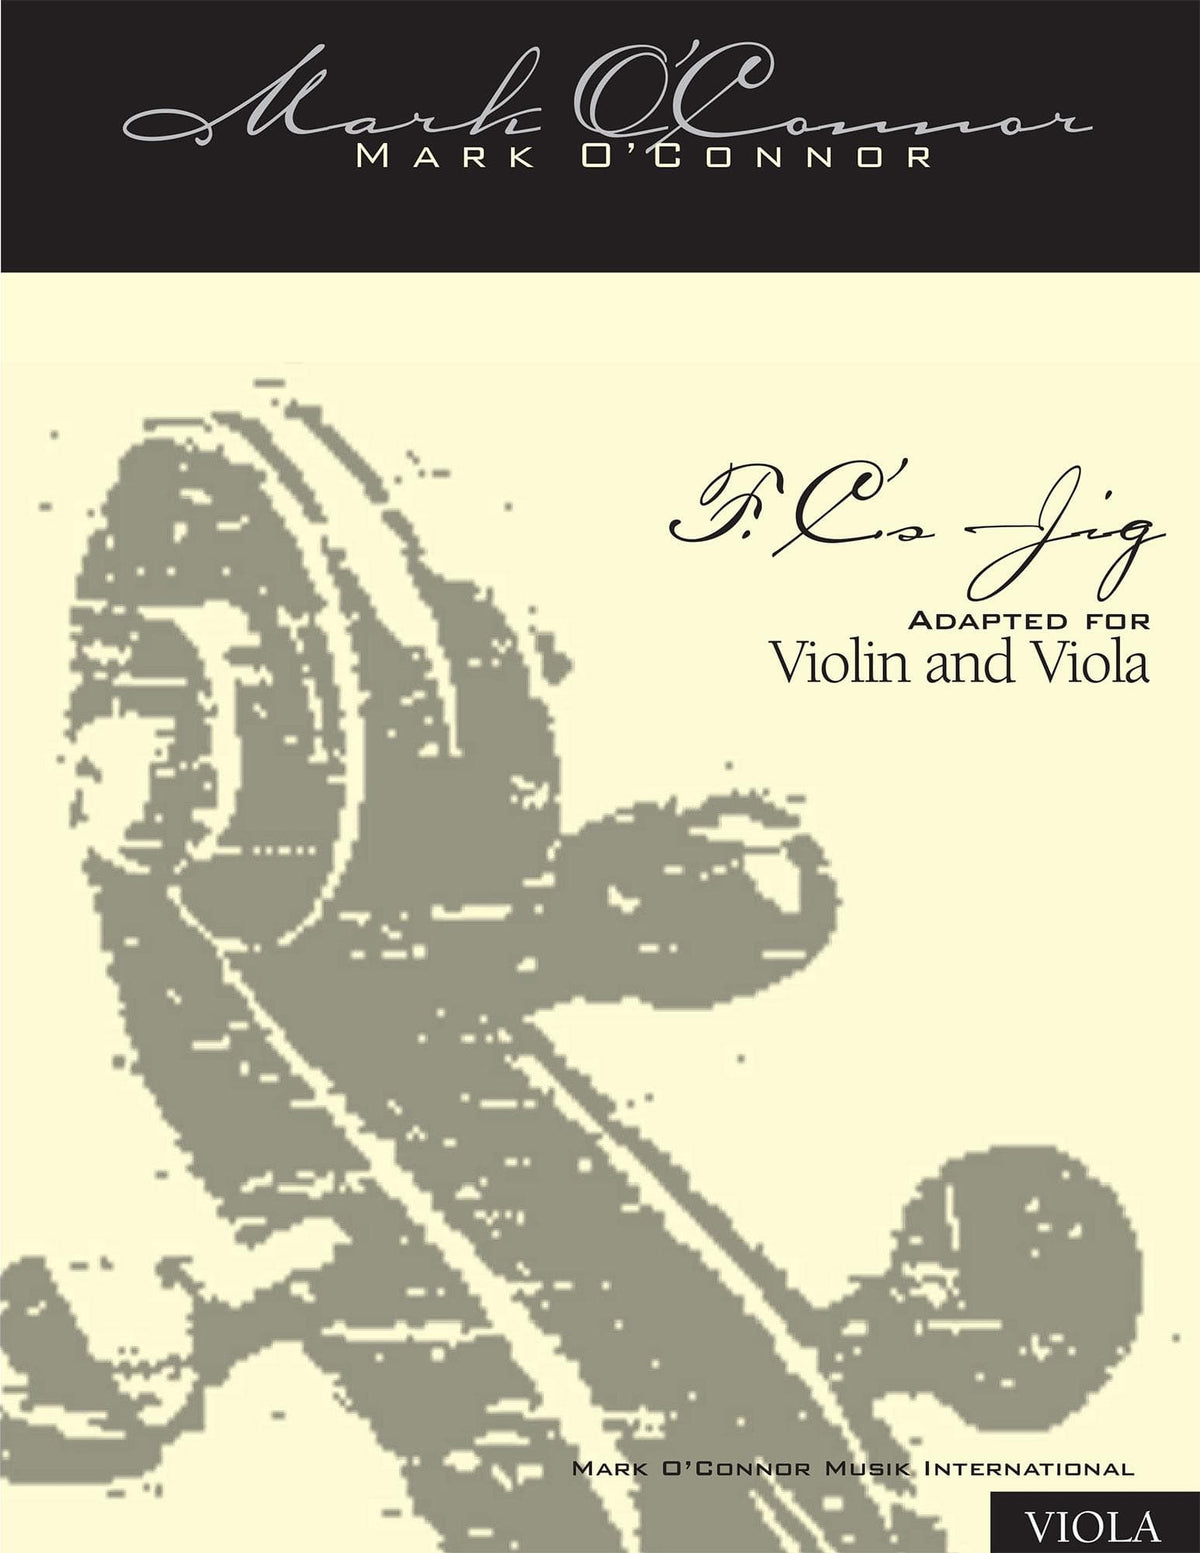 O'Connor, Mark - F.C.'s Jig for Violin and Viola - Viola - Digital Download